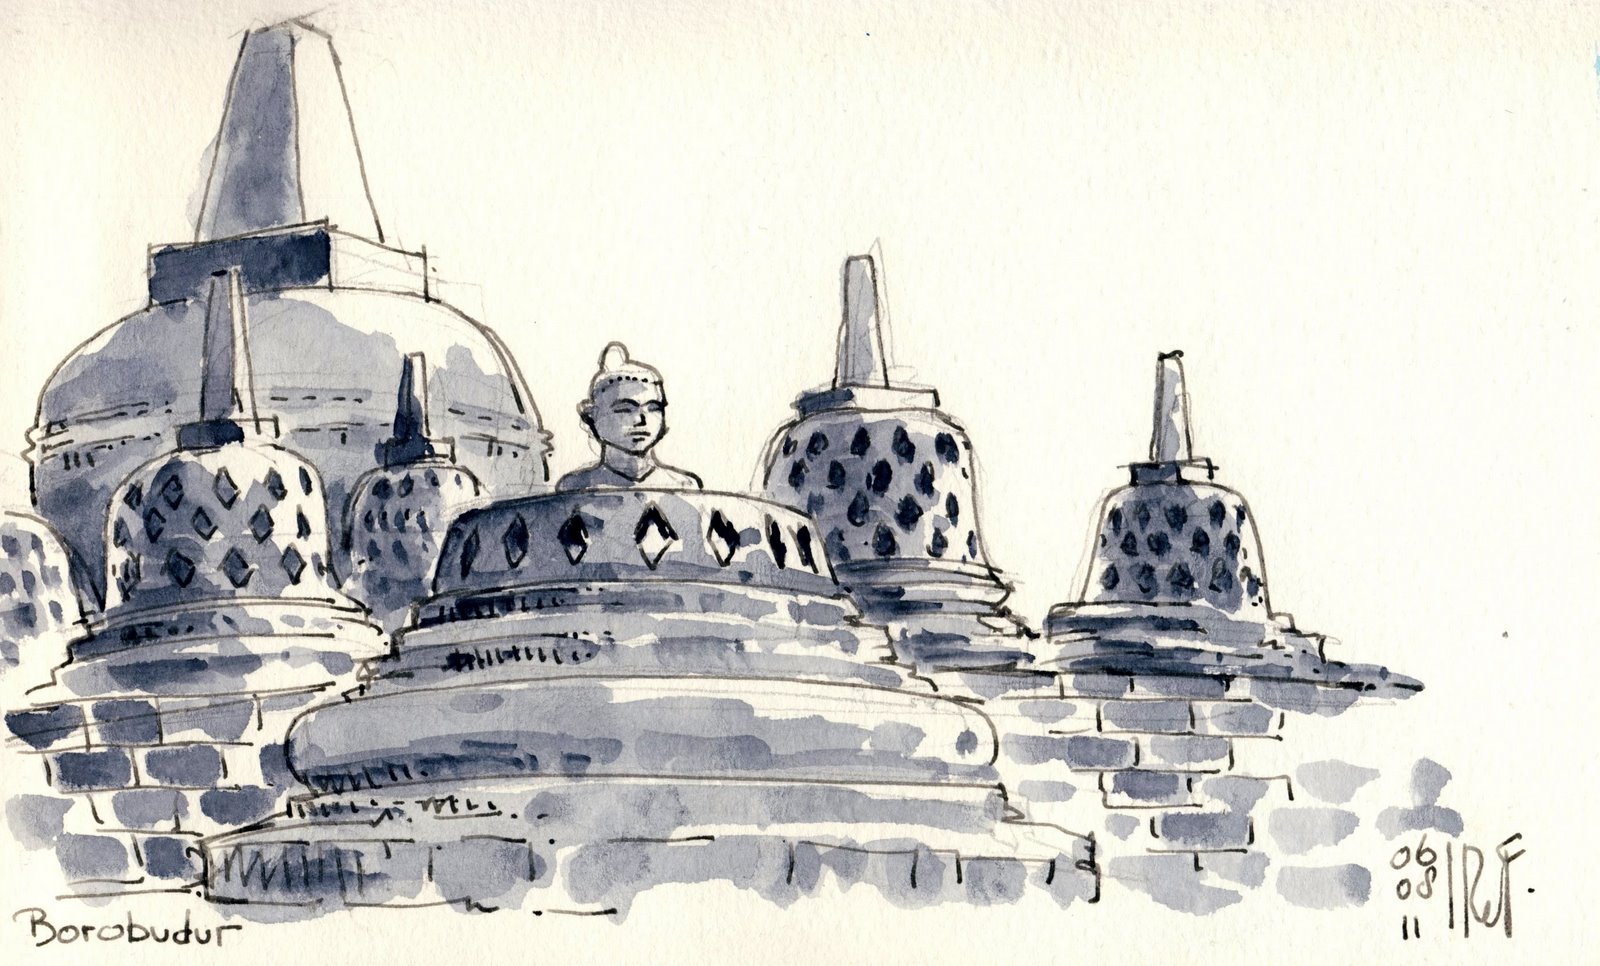 rene fijten sketches: Borobudur